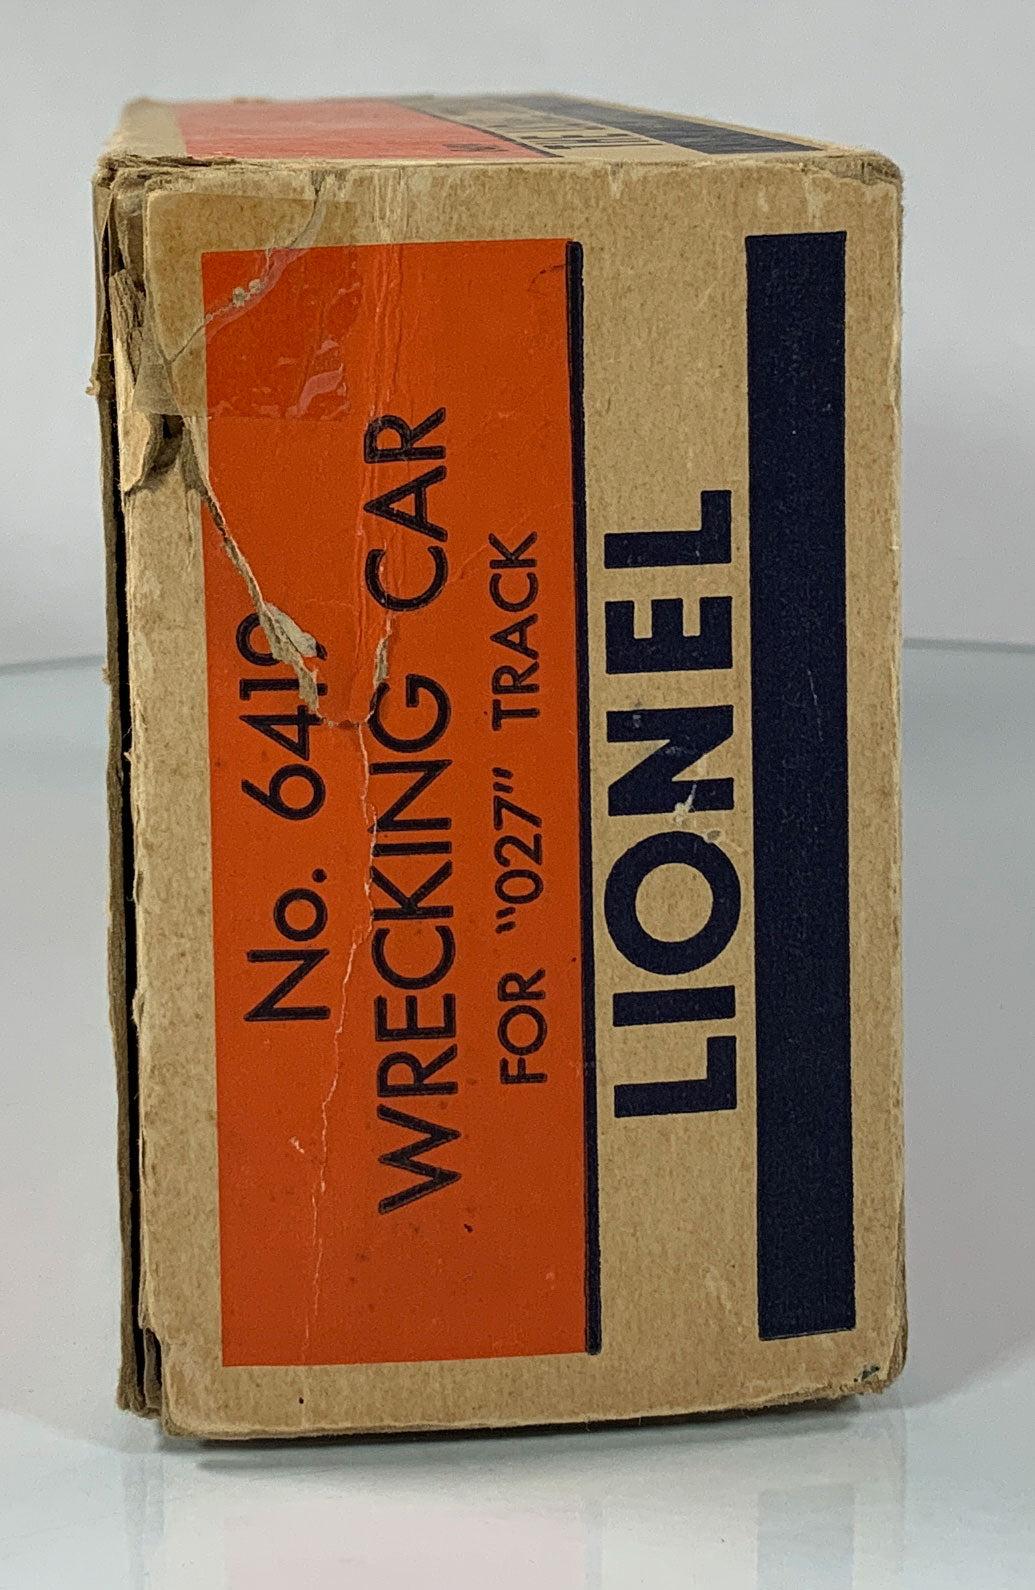 LIONEL • O GAUGE • 1952-1955 Postwar 6419 D L & W Wrecking Car Caboose • Original Box • EXCELLENT COND